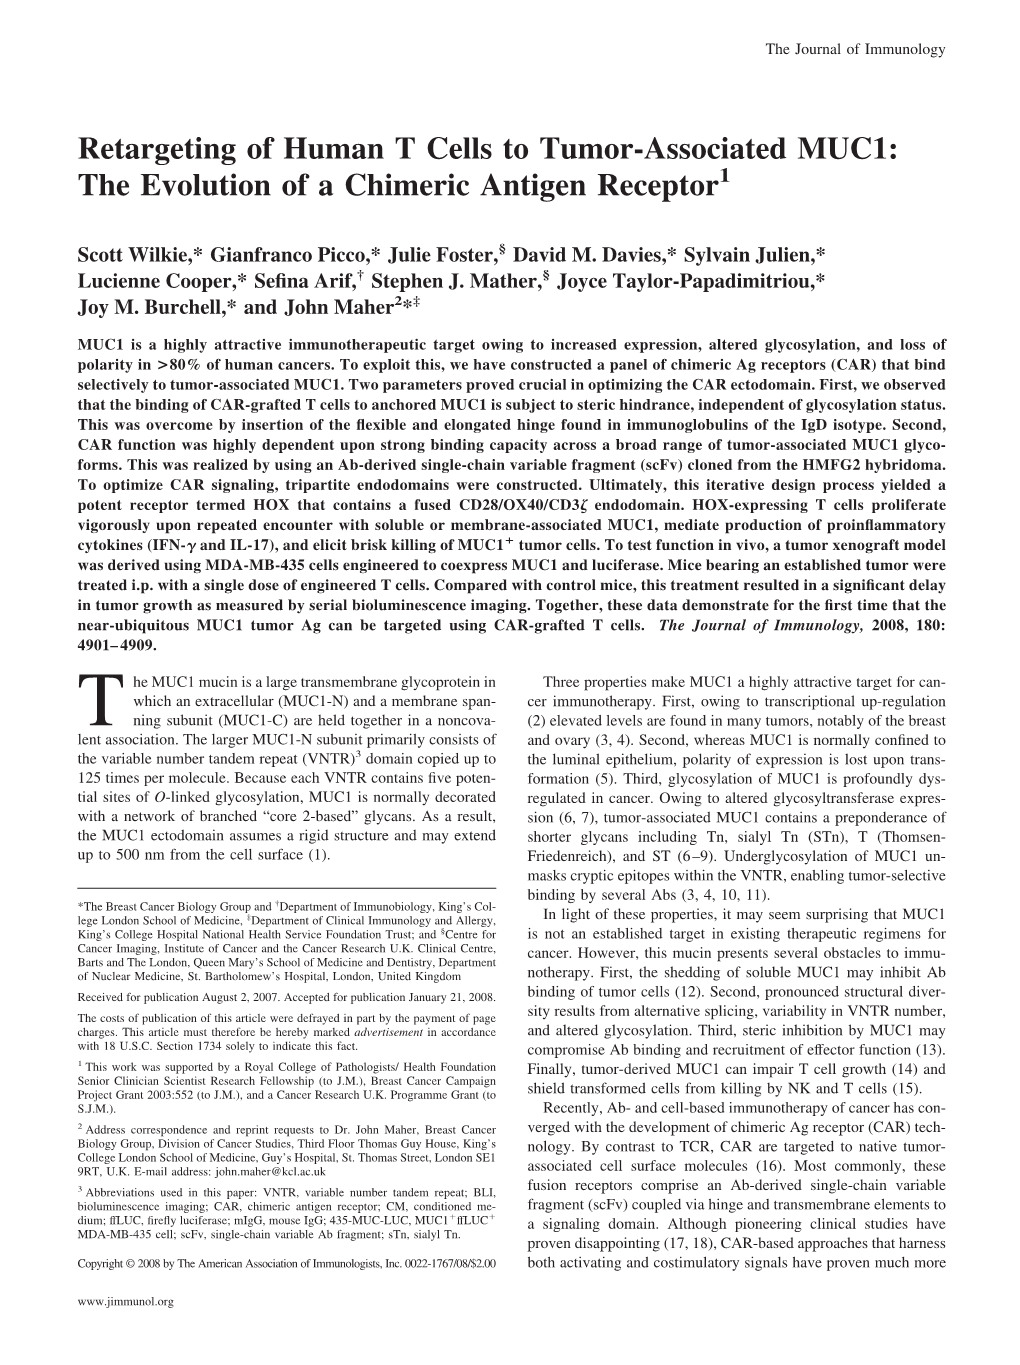 Chimeric Antigen Receptor a Tumor-Associated MUC1